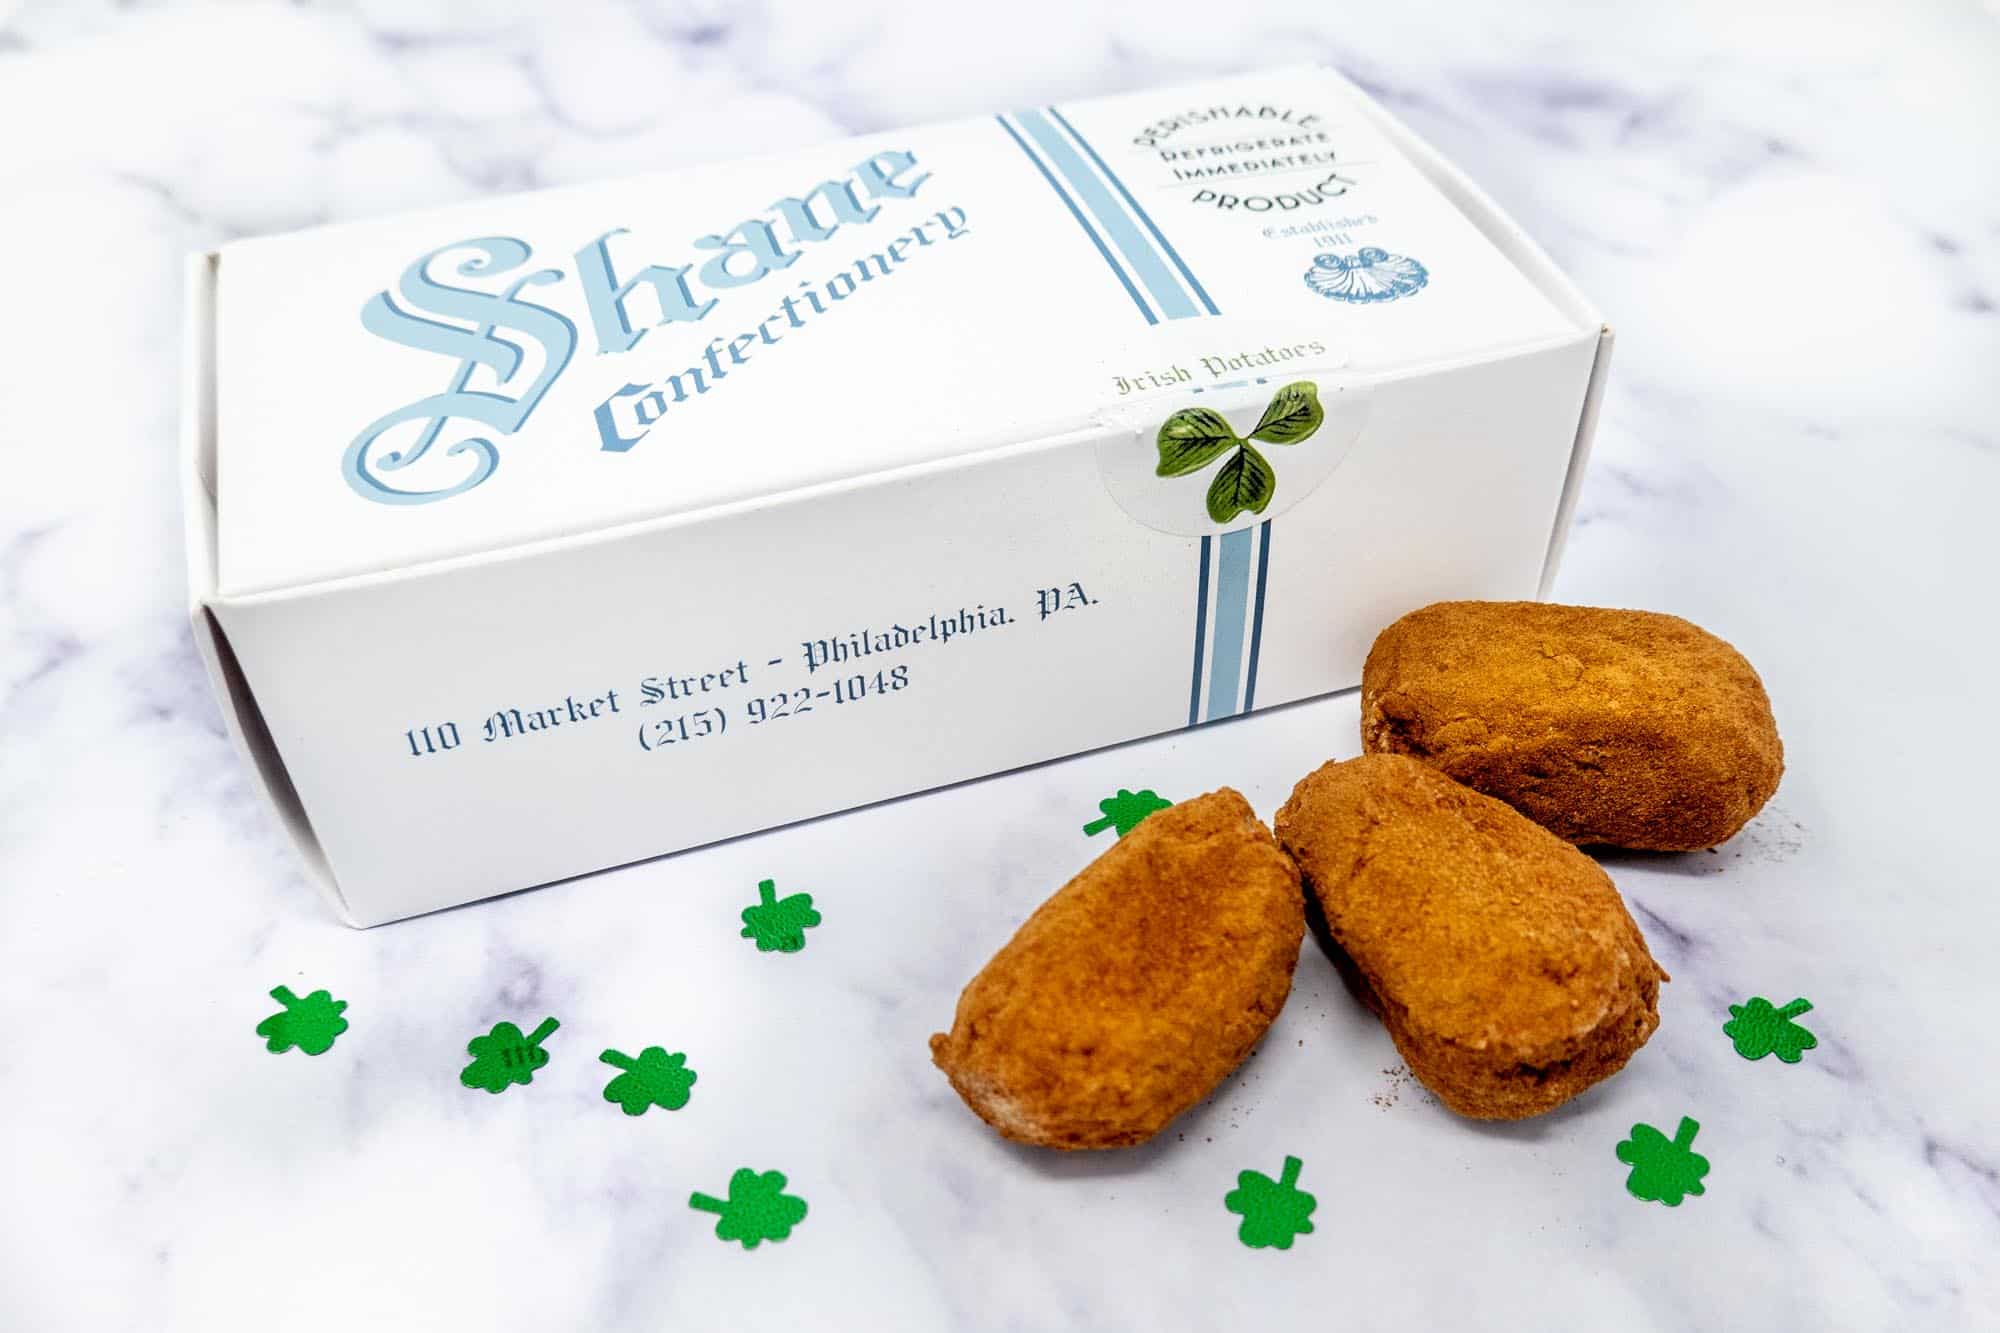 Three Irish potatoes and the Shane Confectionery box